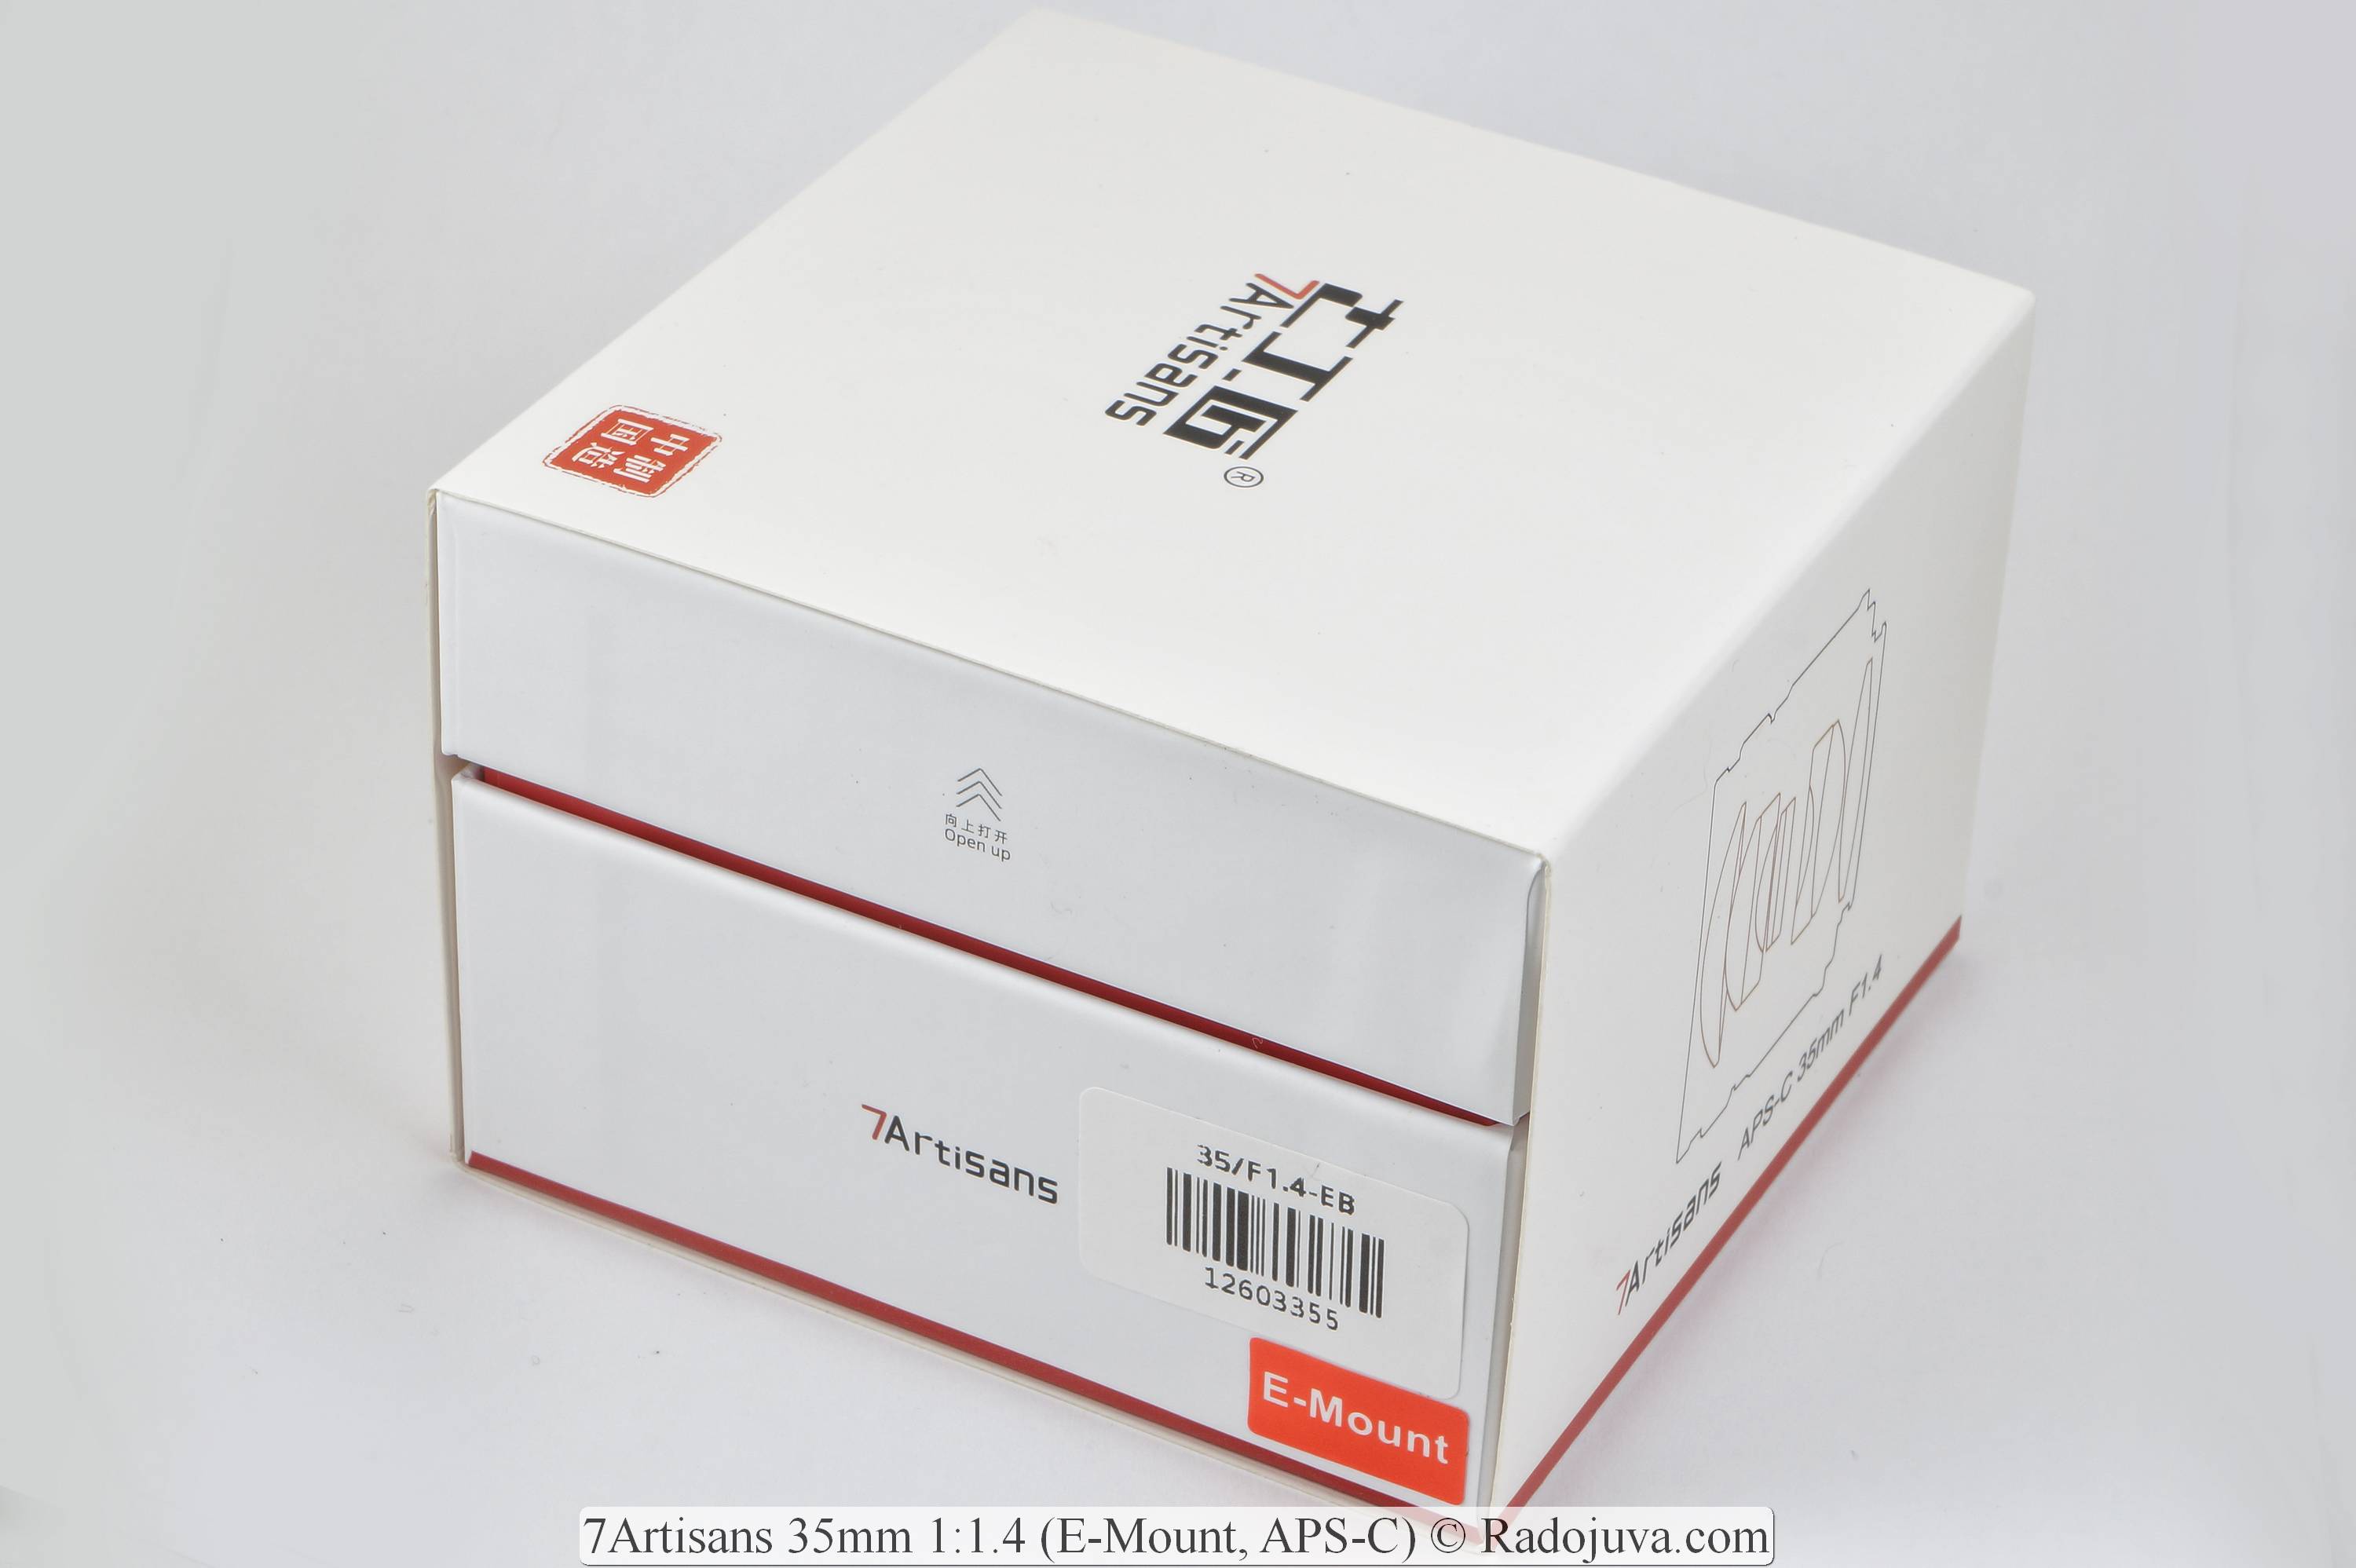 Caja con 7 lentes Artisans 35mm 1:1.4